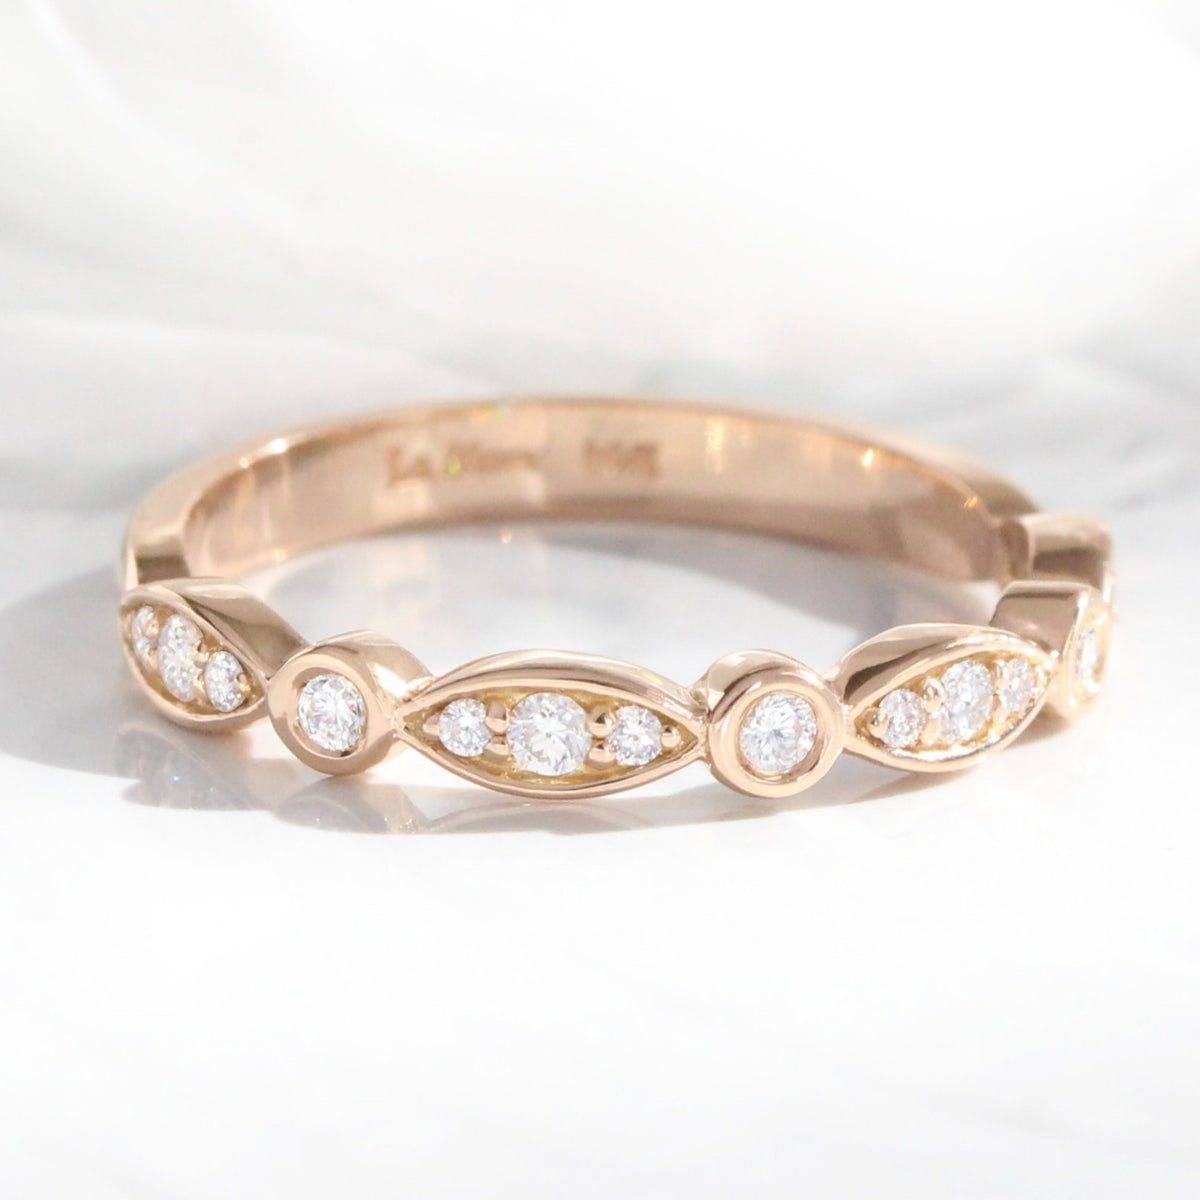 Bezel diamond wedding ring rose gold scalloped half eternity band la more design jewelry